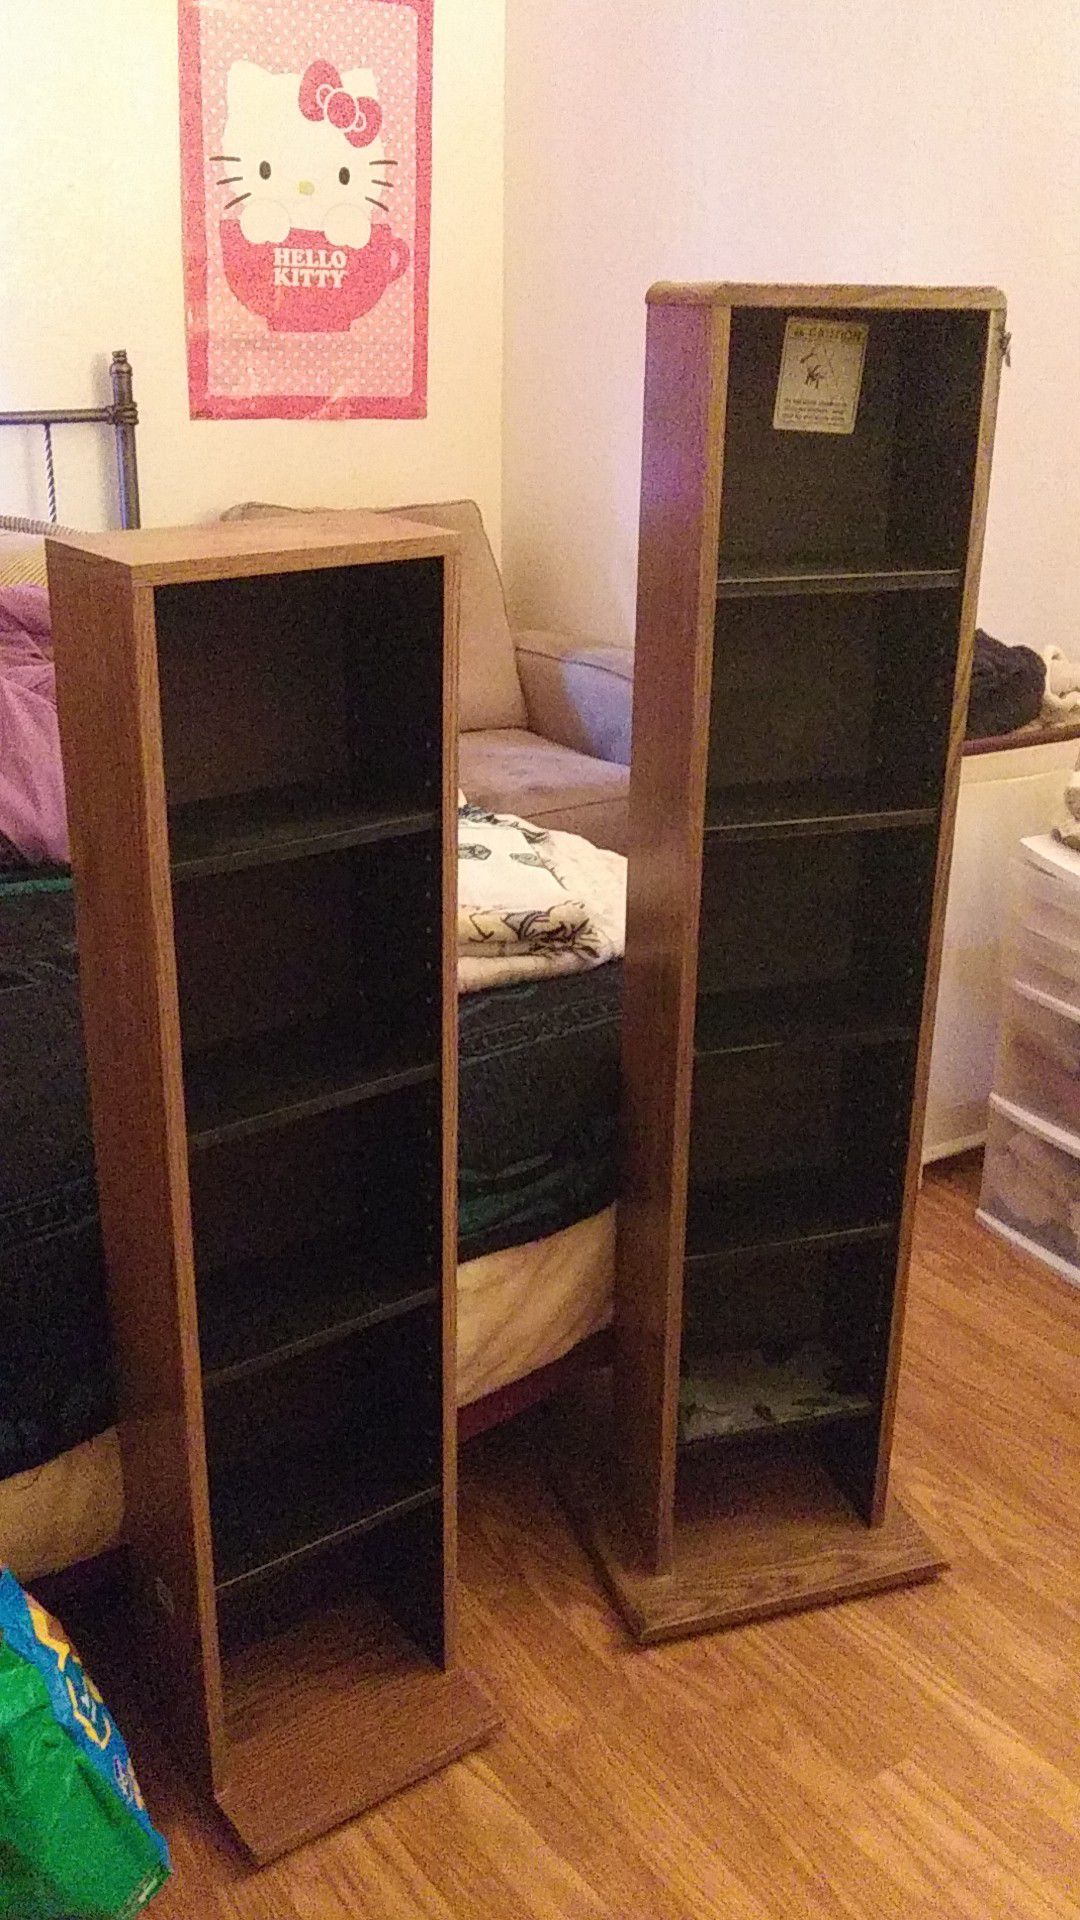 2 shelves (great for holding DVDs)